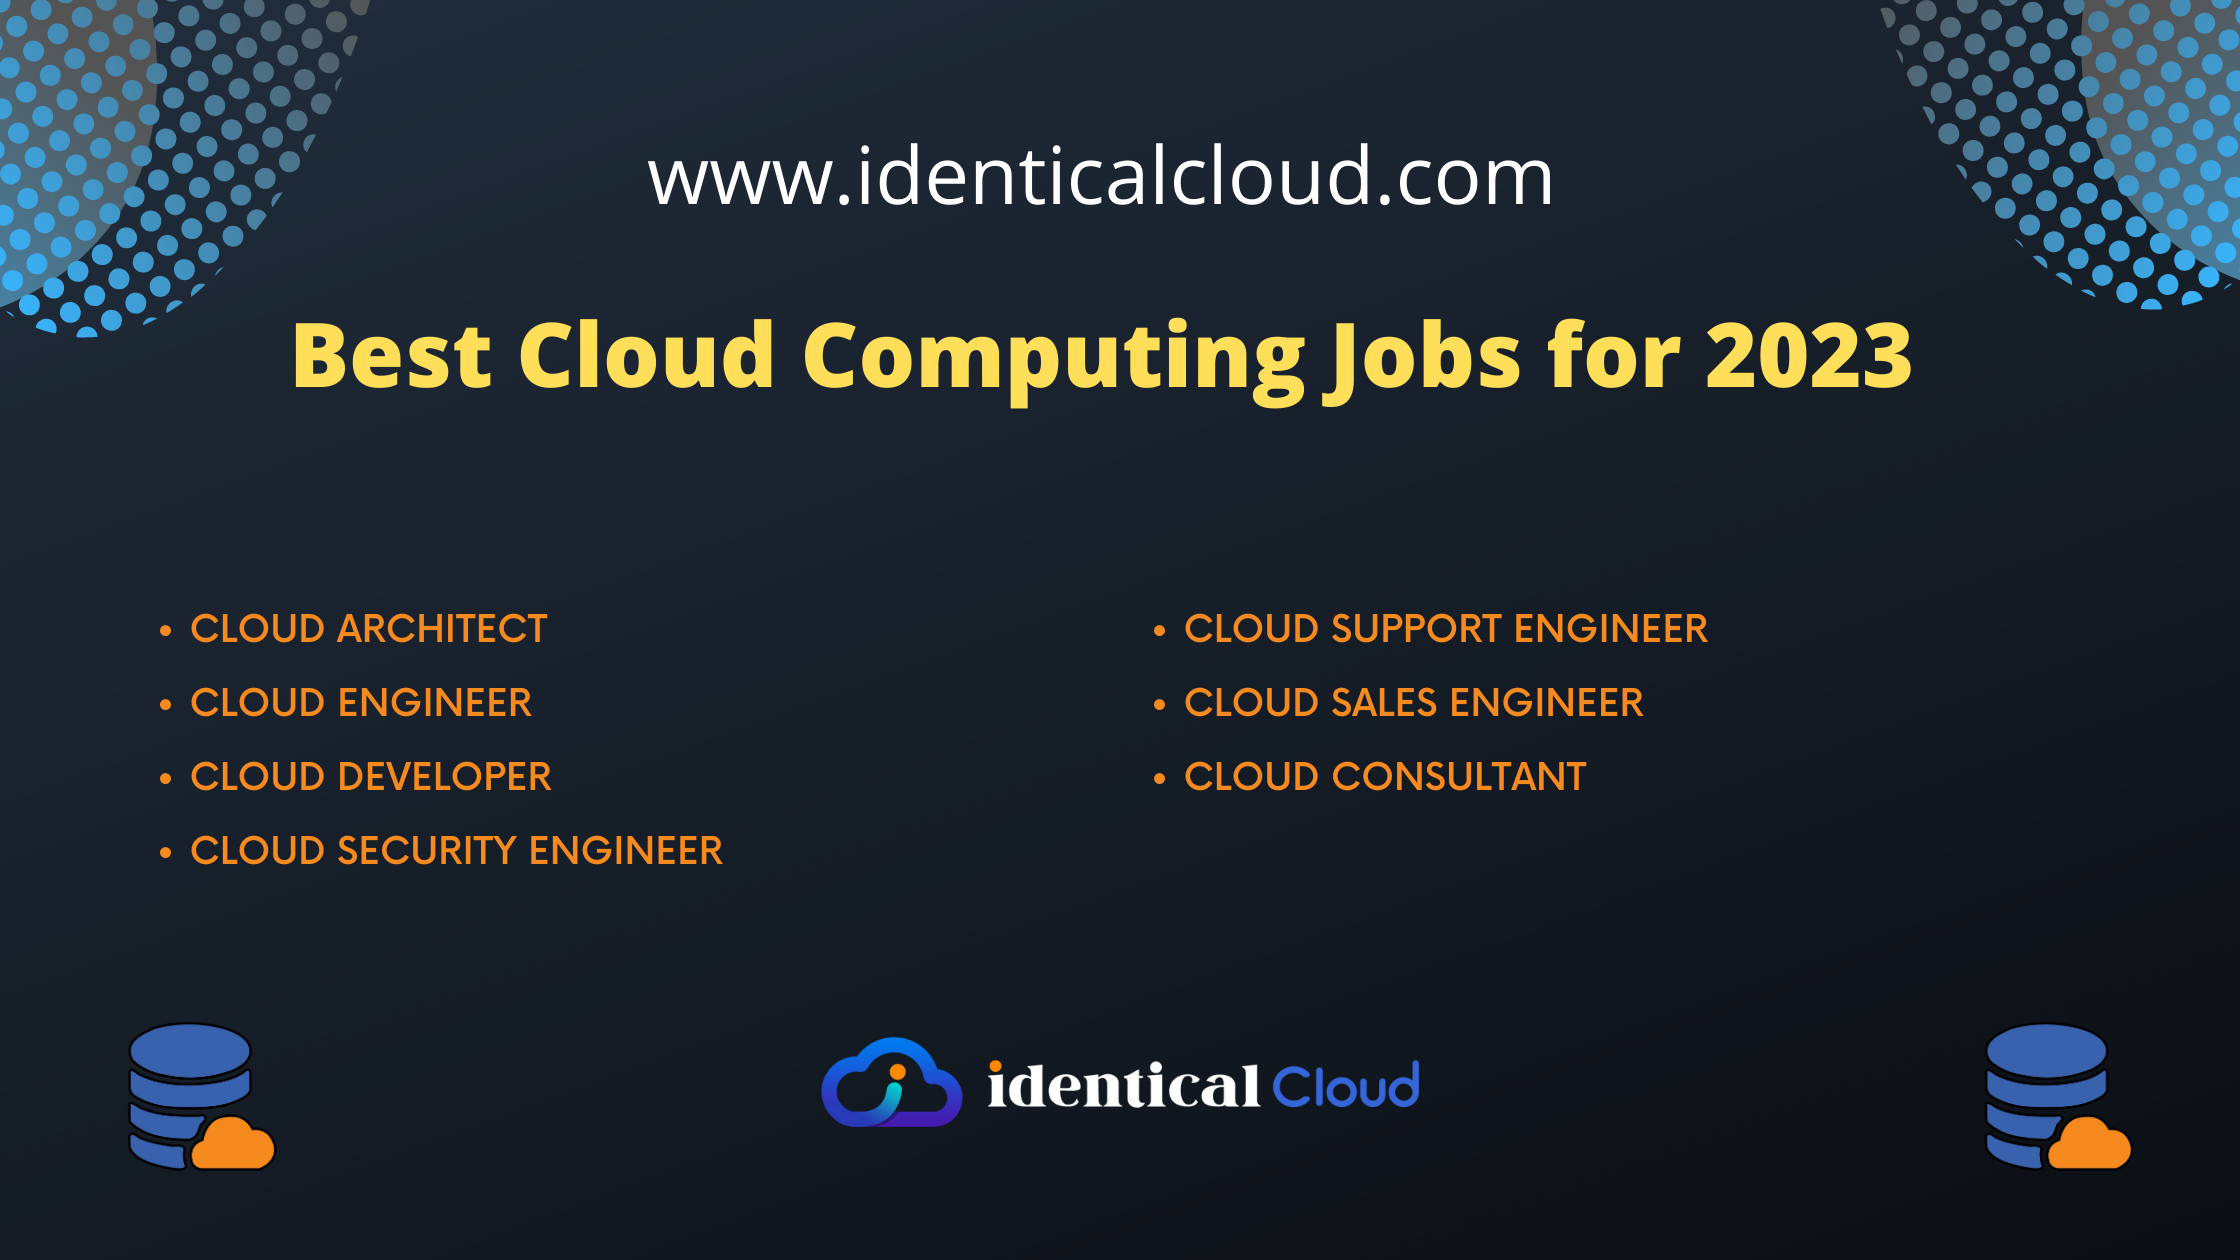 Best Cloud Computing Jobs for 2023 - identicalcloud.com